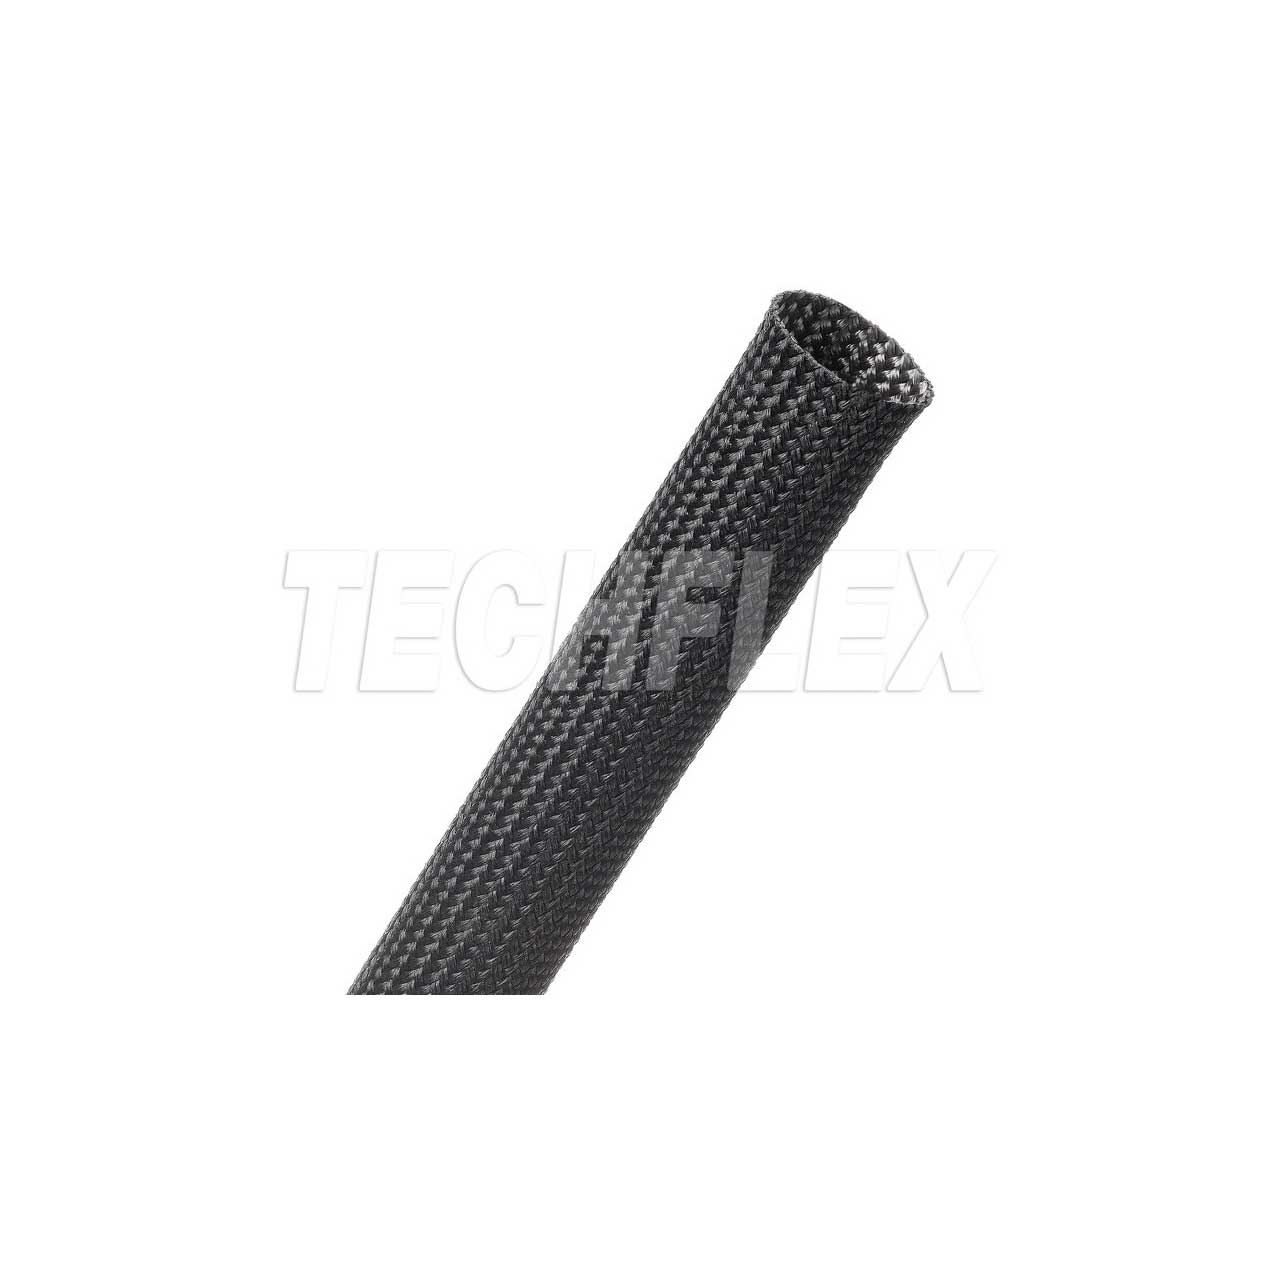 TechFlex FGL0.75BK100 Insultherm High Temperature Resistant Braided Fiberglass Cable Sleeving - Black - 100 Foot FGL0.75BK100